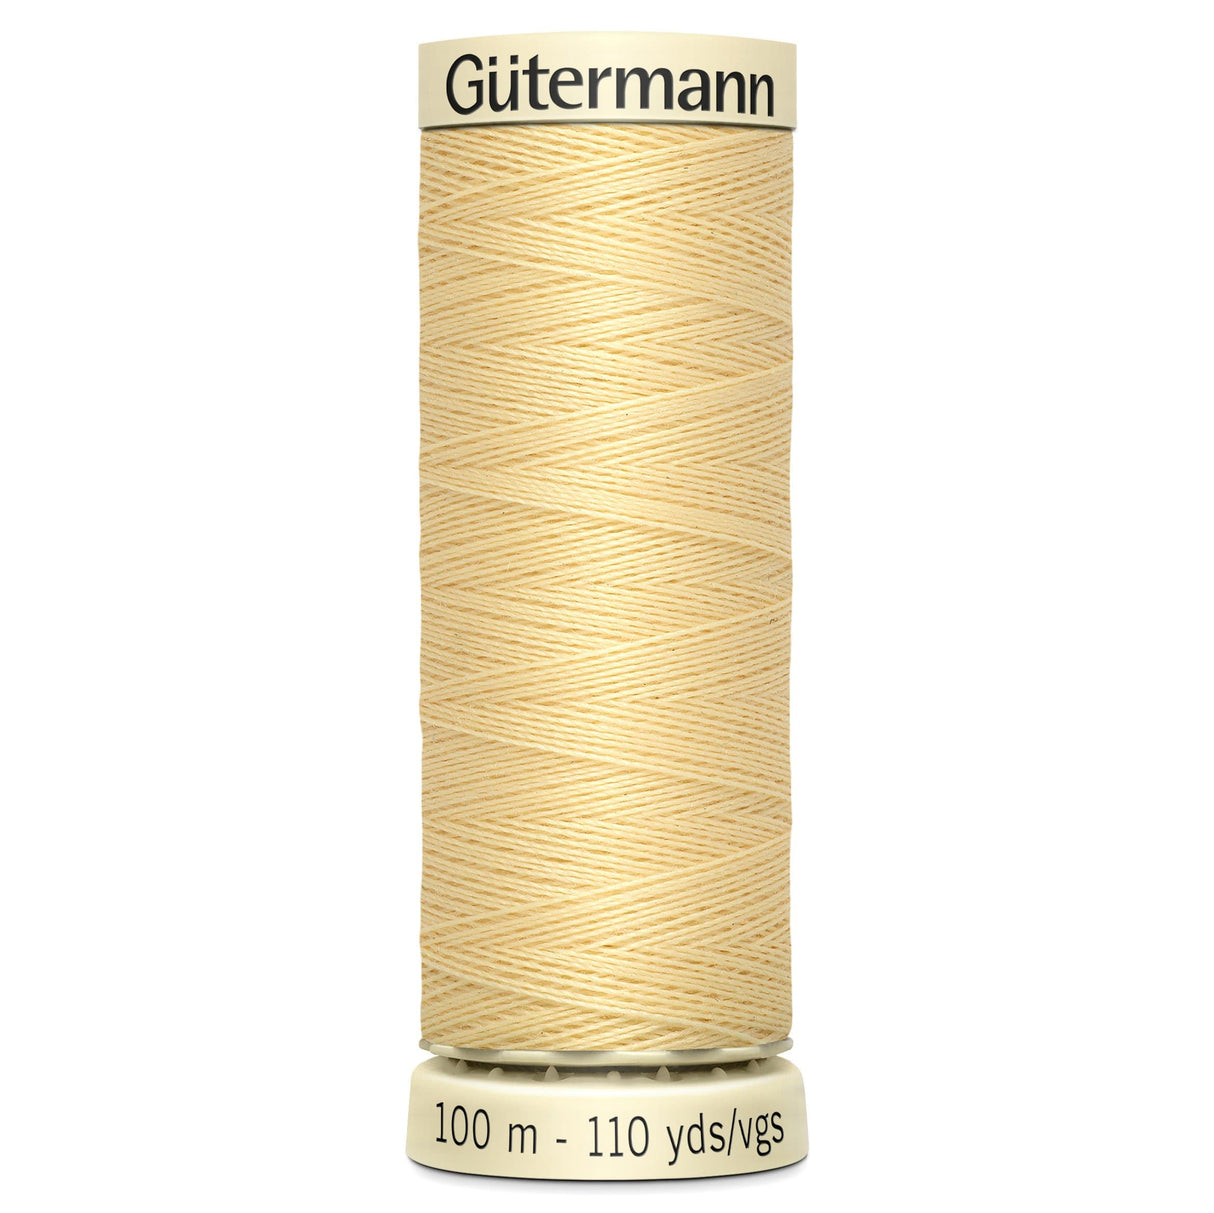 Groves Haberdashery 325 Gutermann Thread Sewing Cotton 100 m Black to Pink